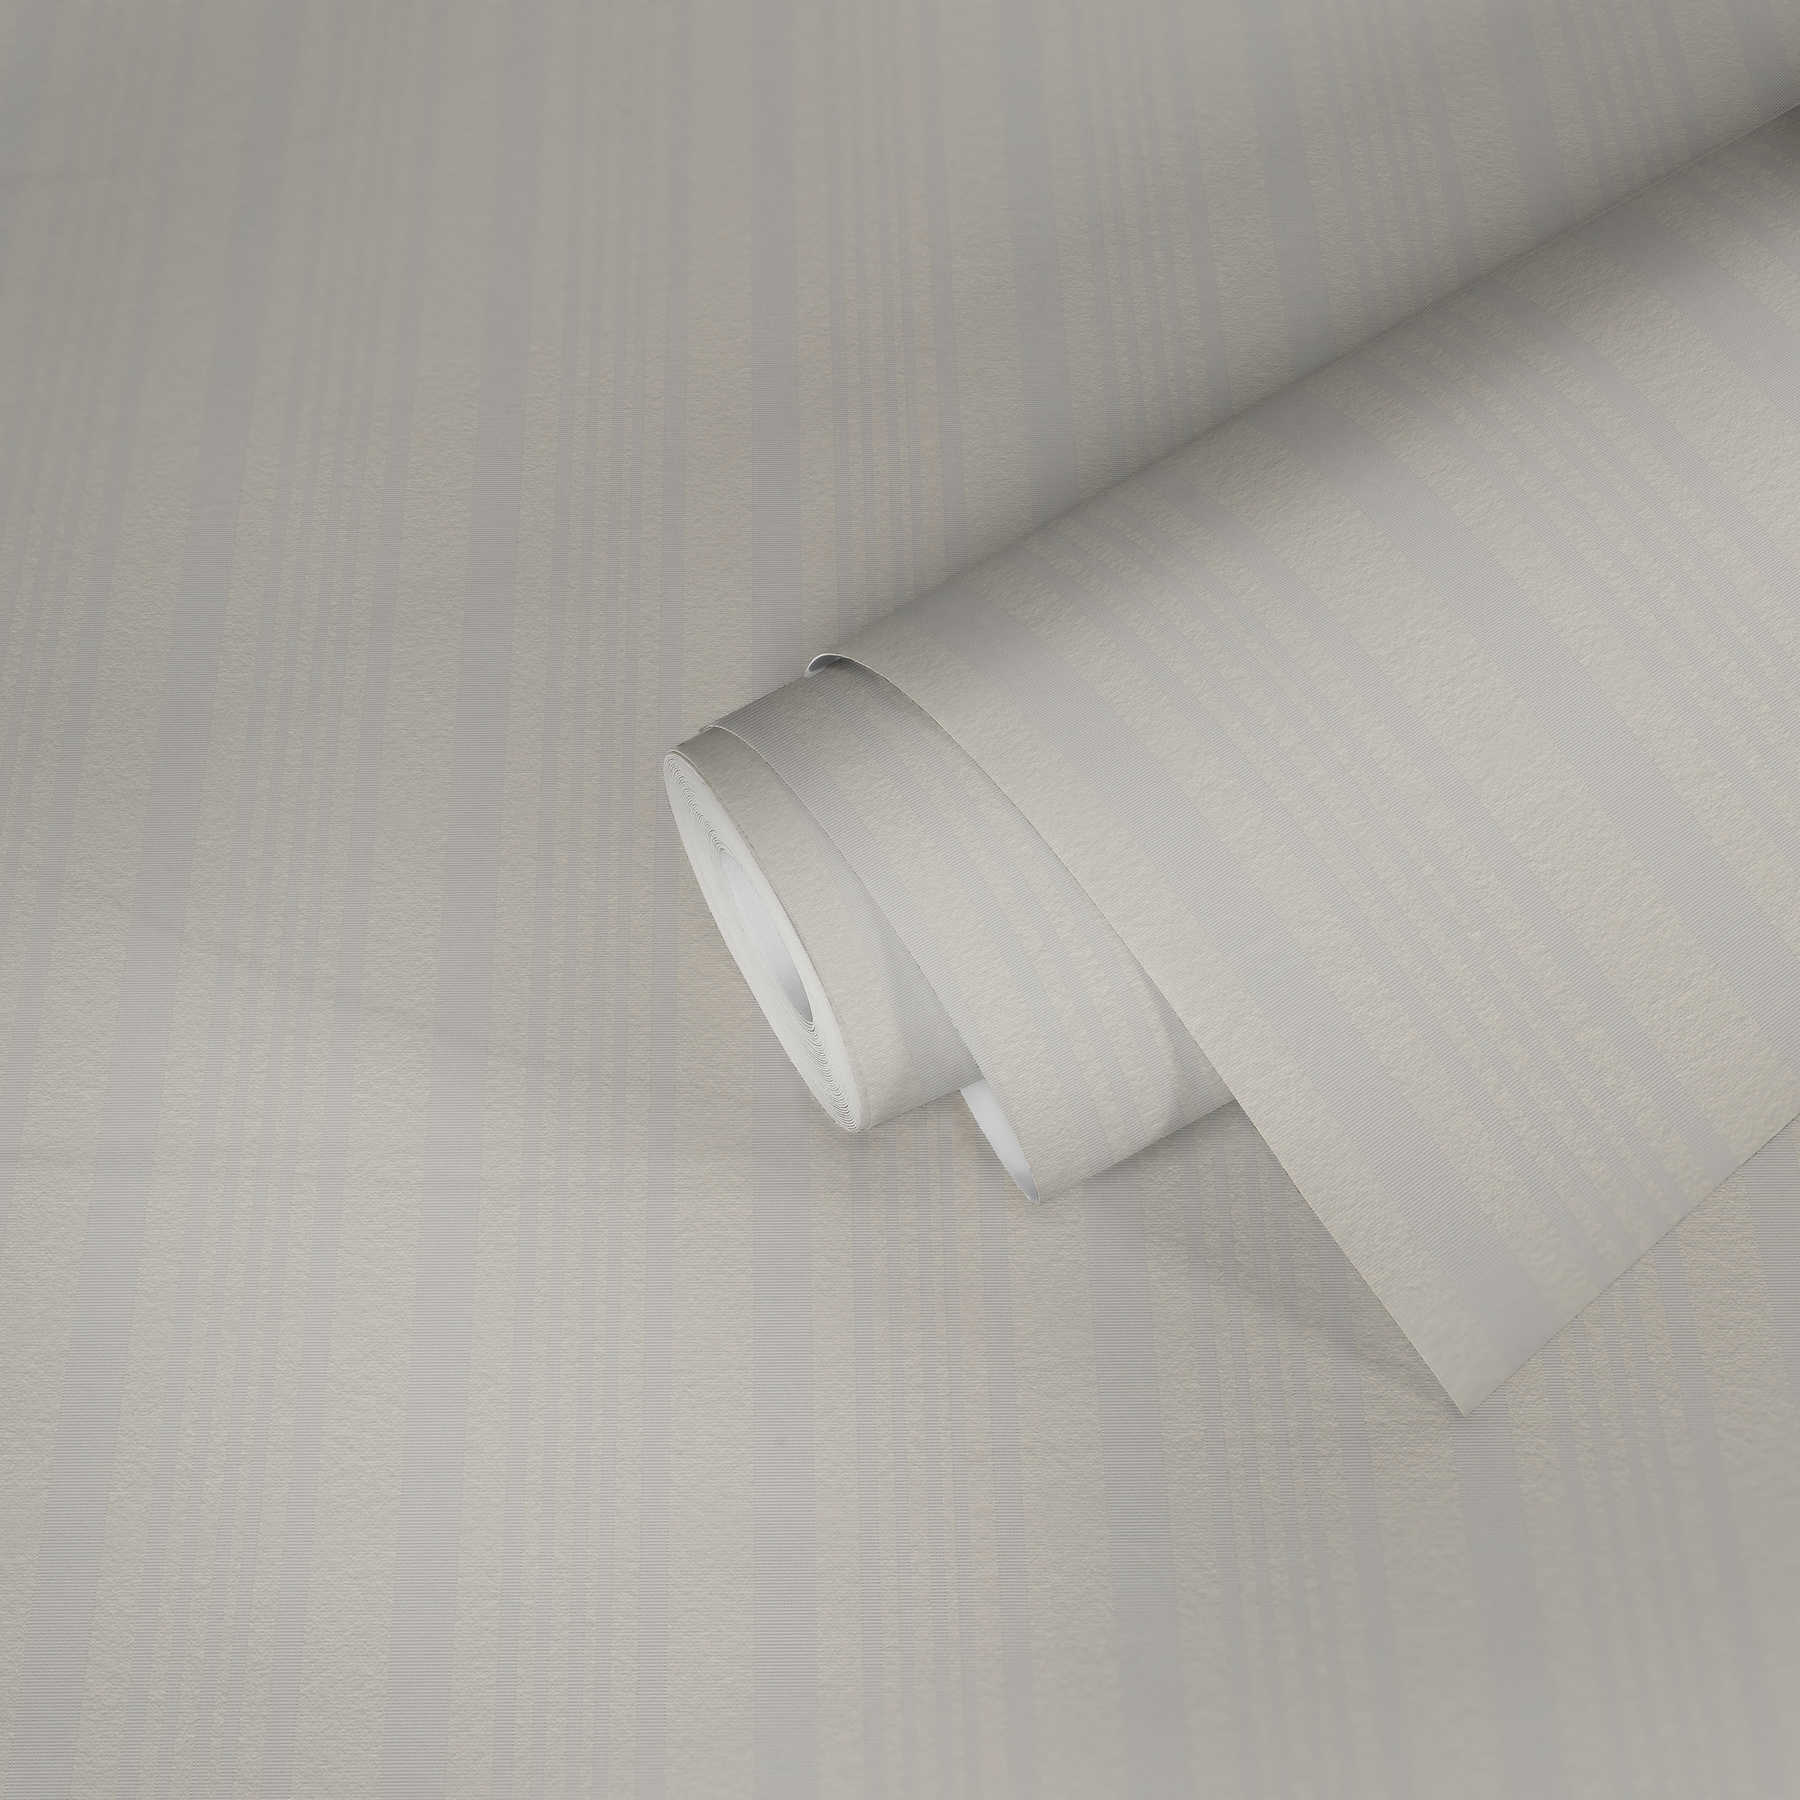             Stripe behang smalle lijn design - wit
        